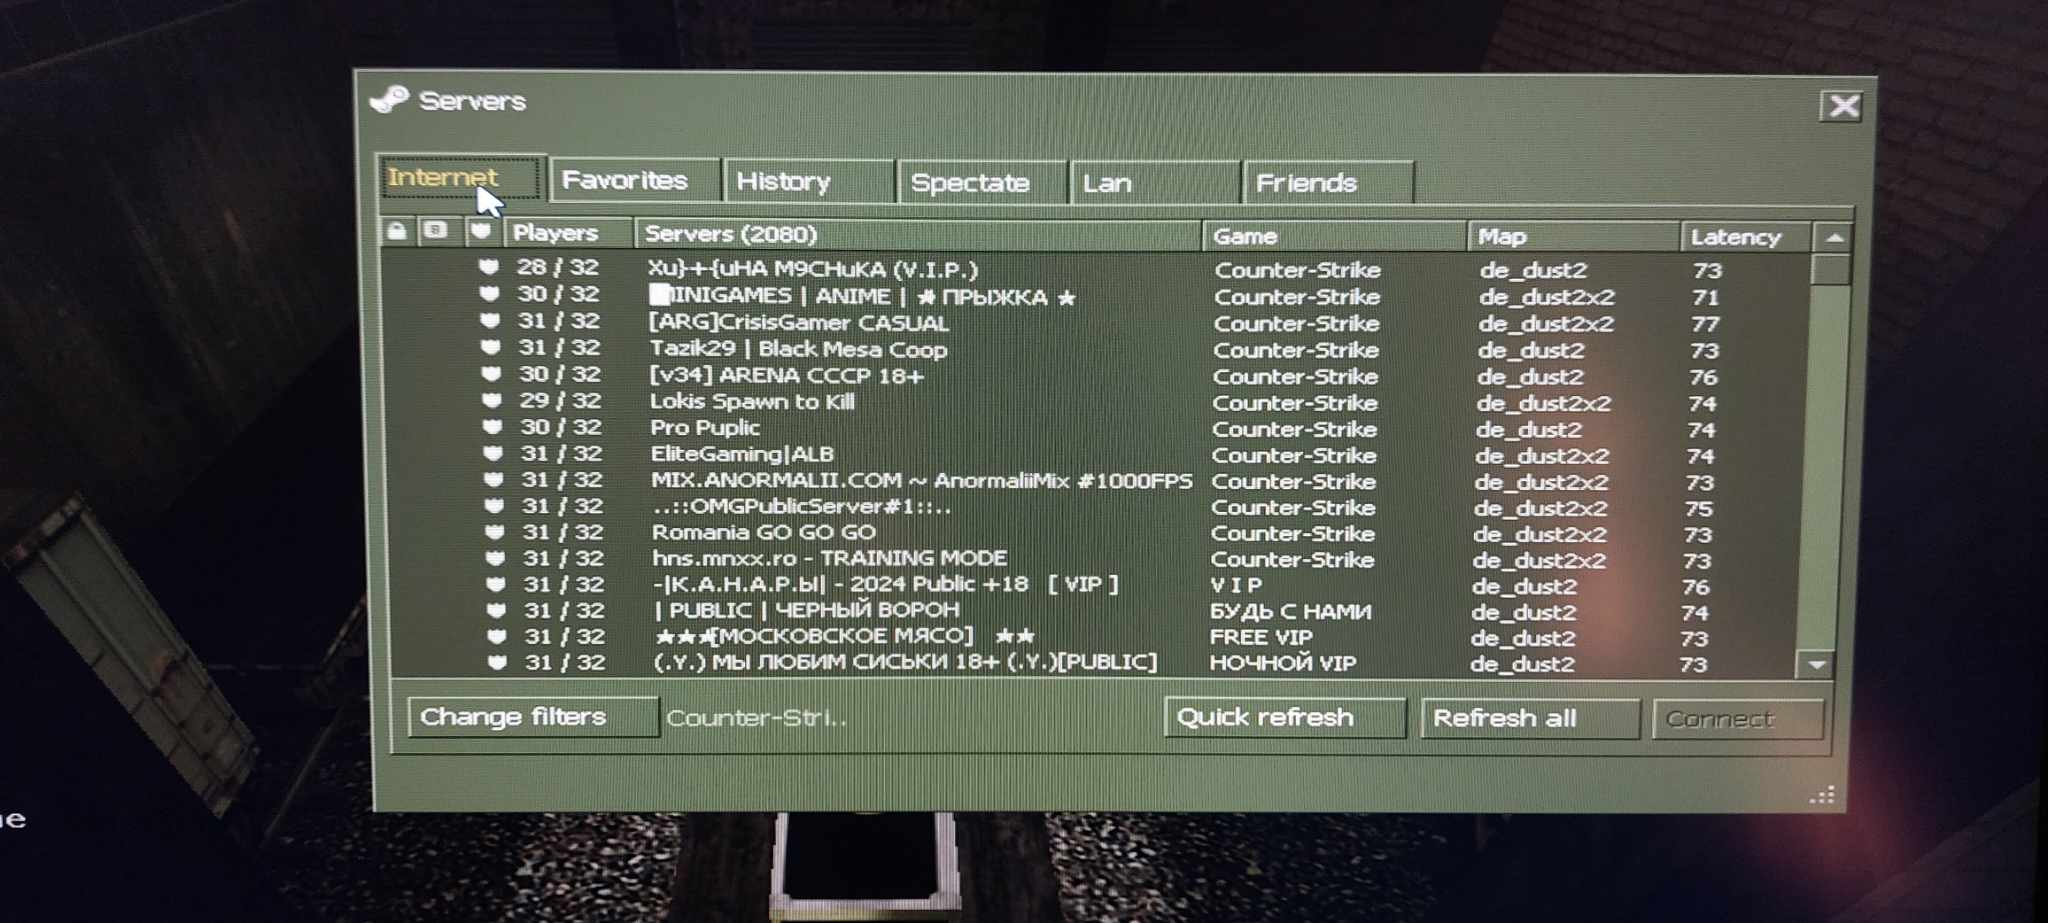 CS 1.6 Servers List Not Showing?